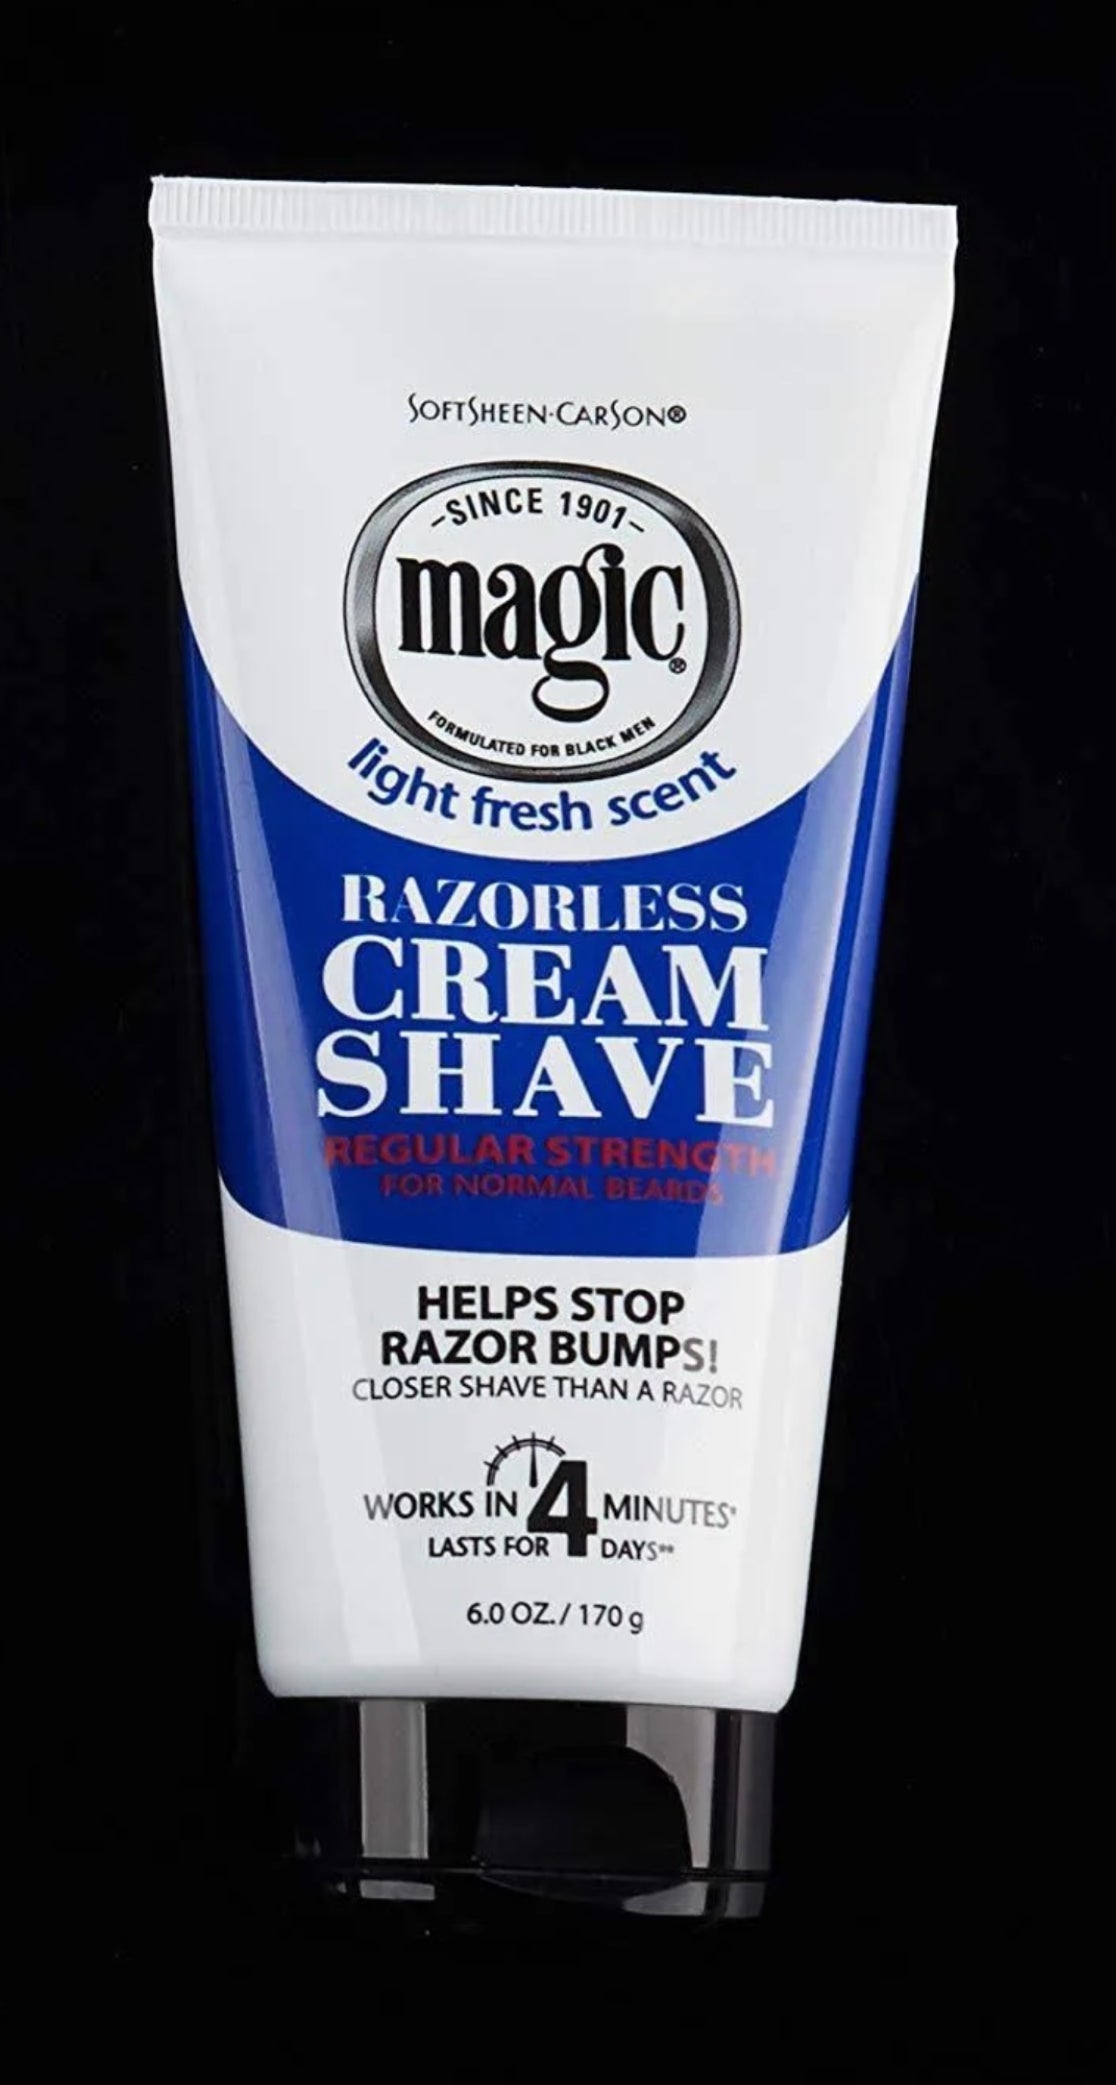 Magic Cream Shave Razorless regular strength - Tam's Natural Solutions